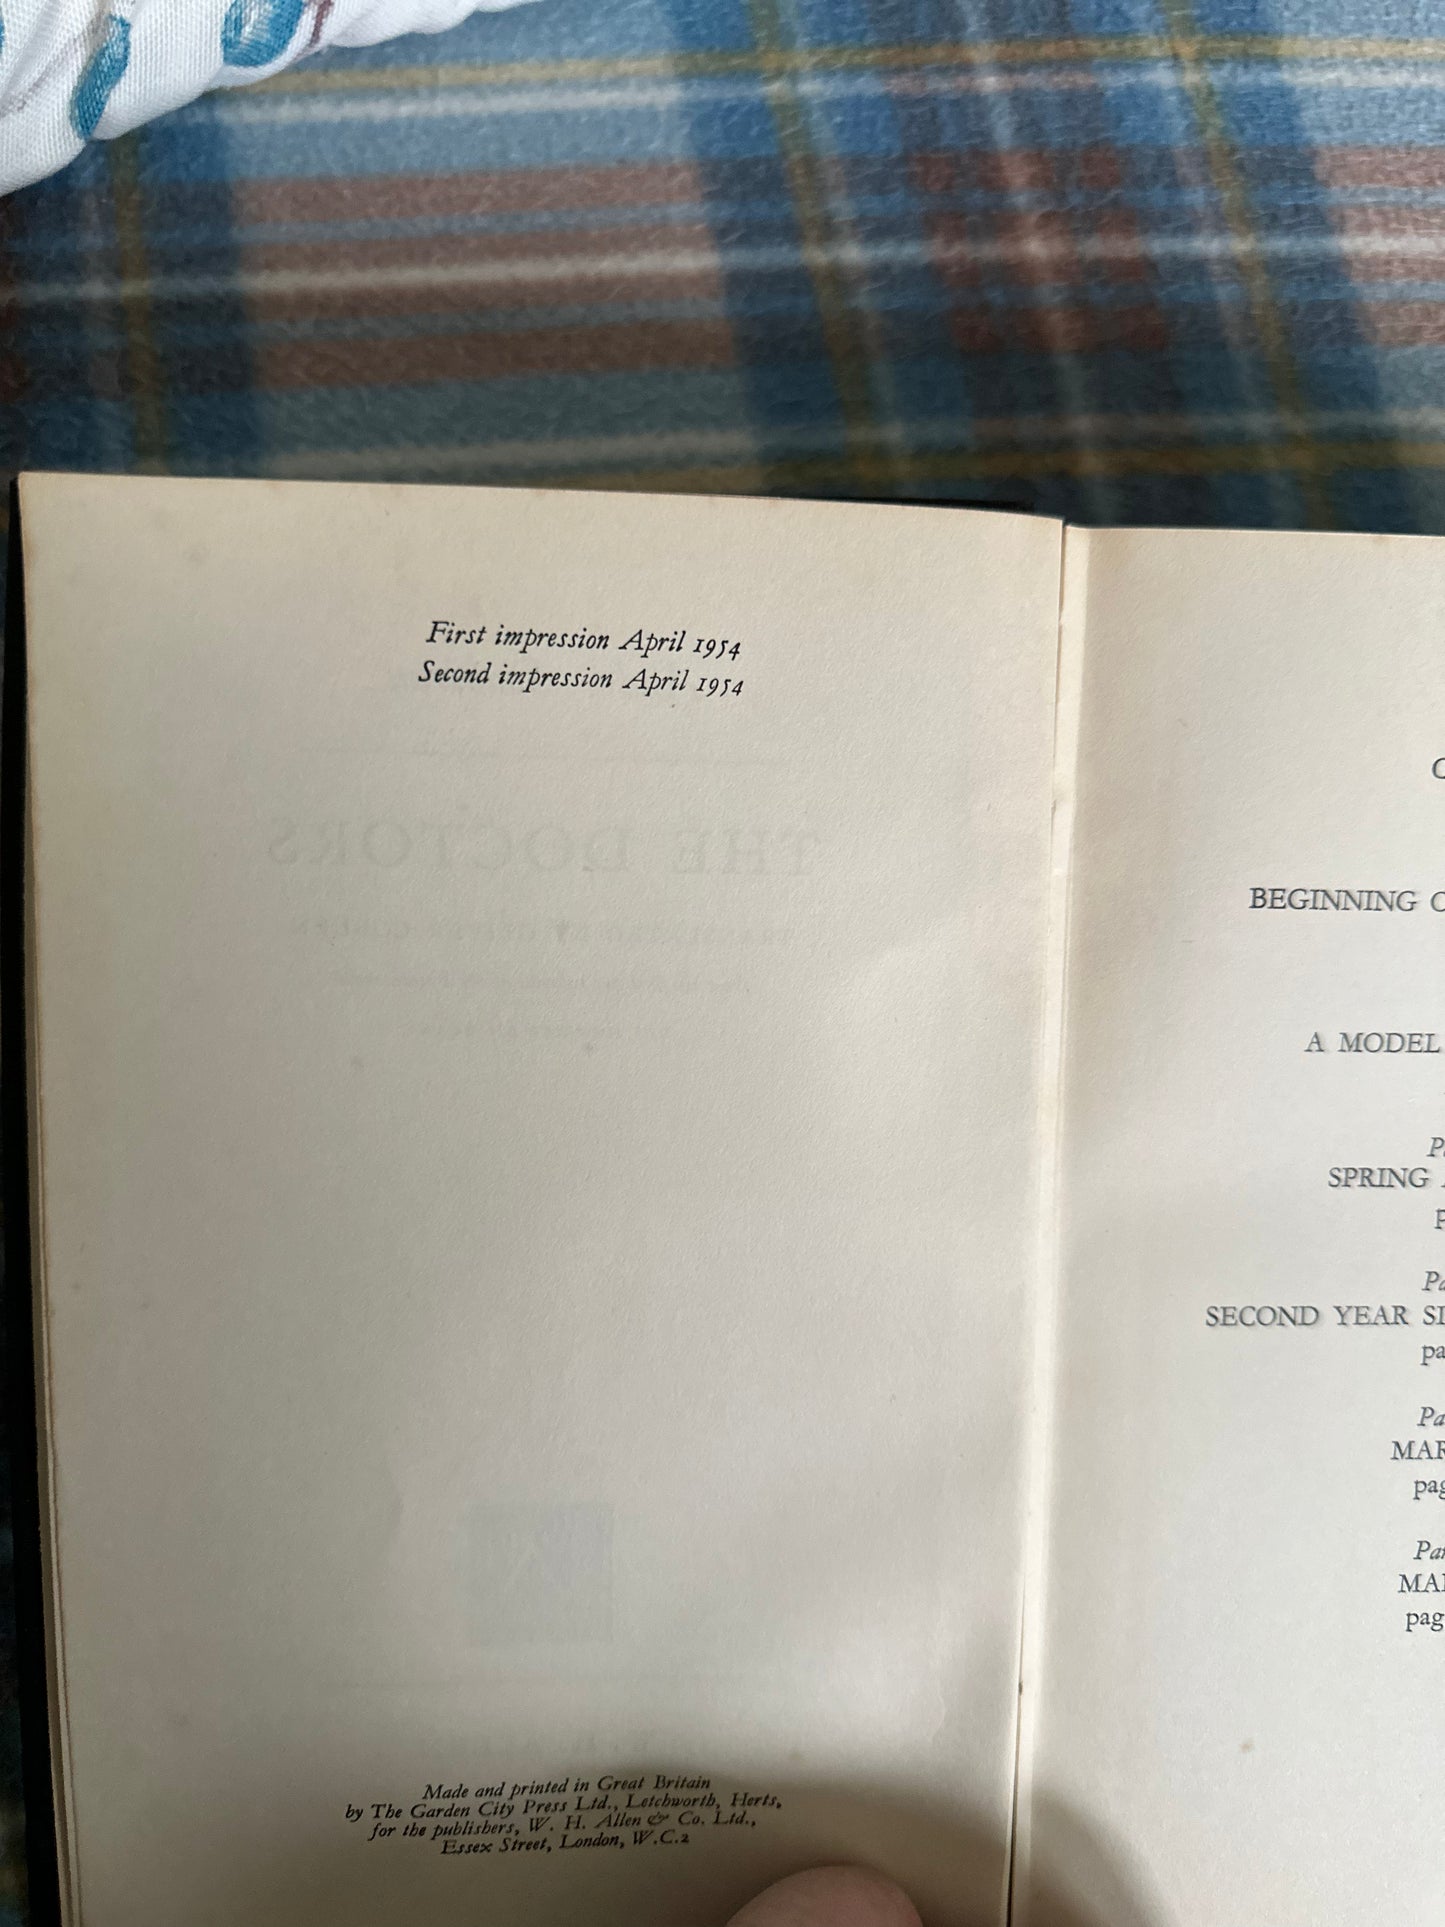 1954 The Doctors - André Soubiran(Translated by Oliver Coburn)W. H. Allen Publisher